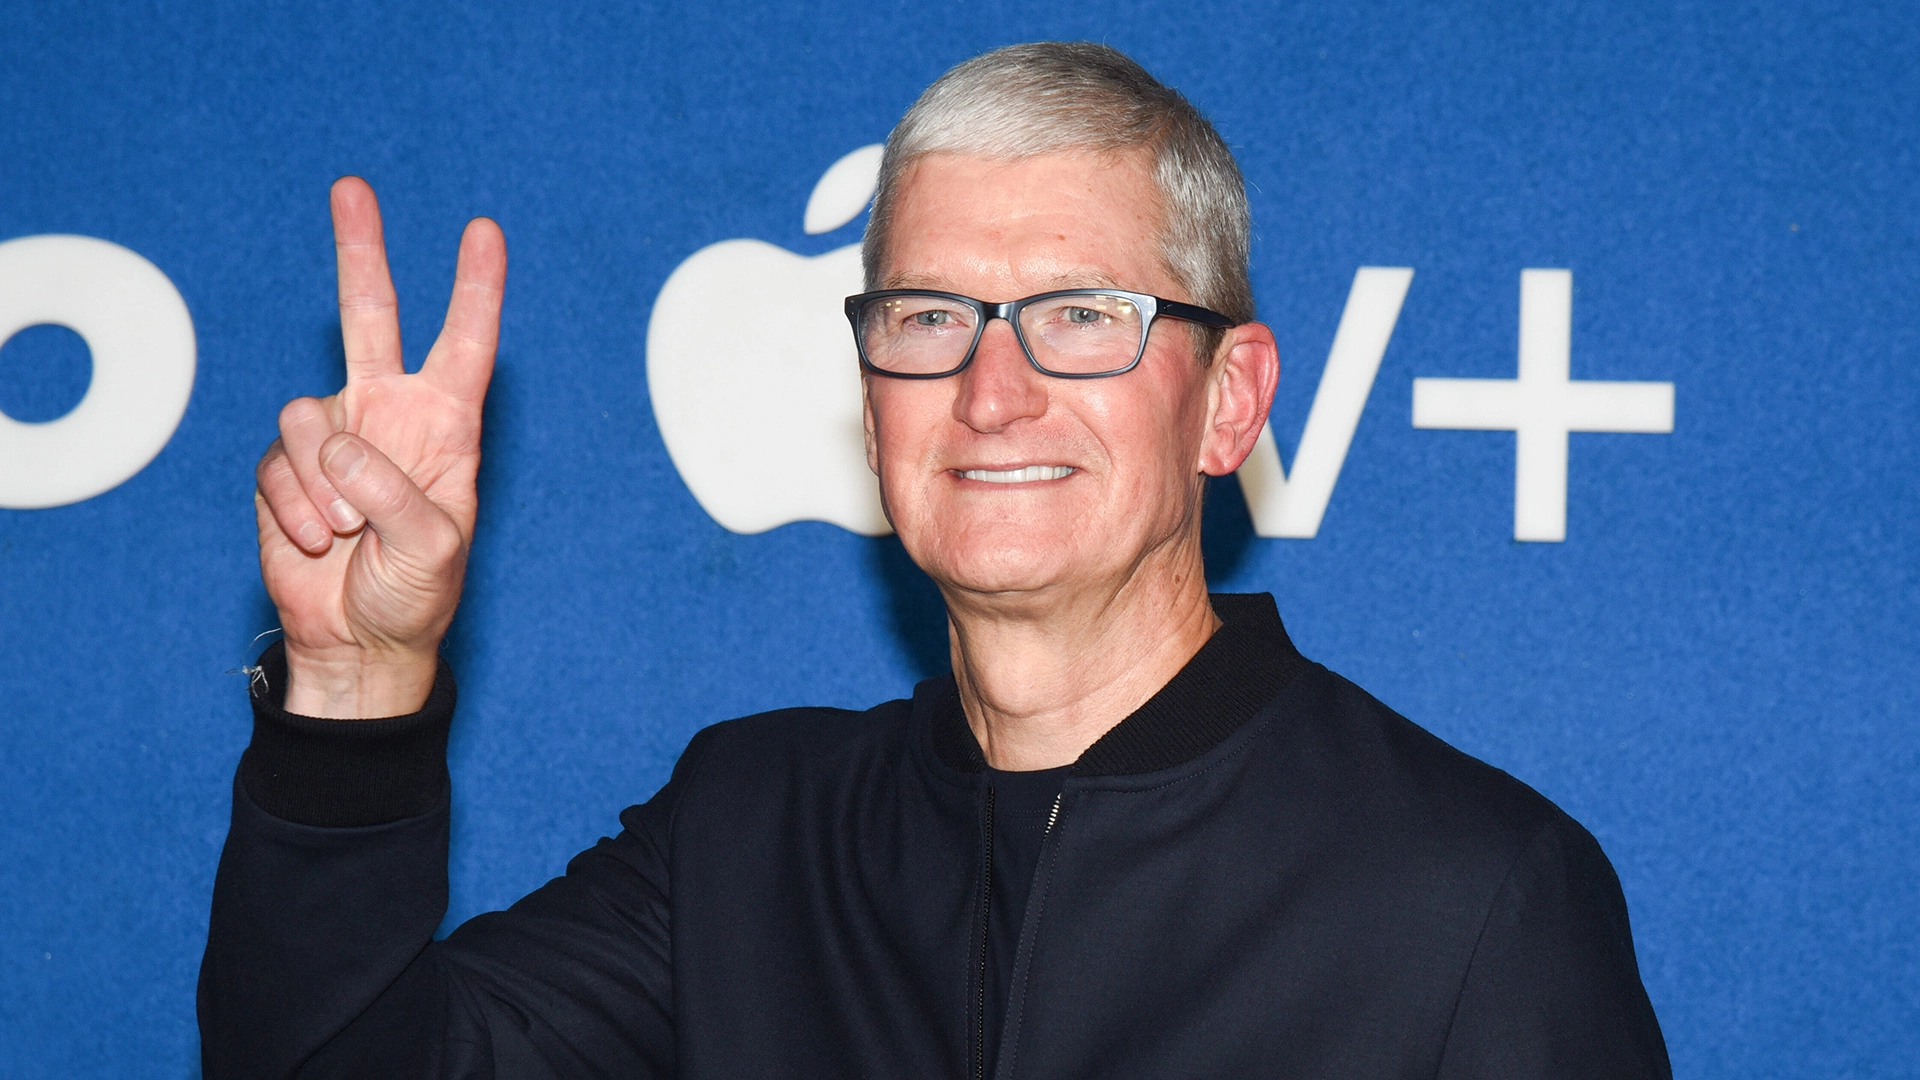 Apple Boss Tim Cook verkauft massiv eigene Aktien – Warnsignal für Anleger? (Foto: Shutterstock)